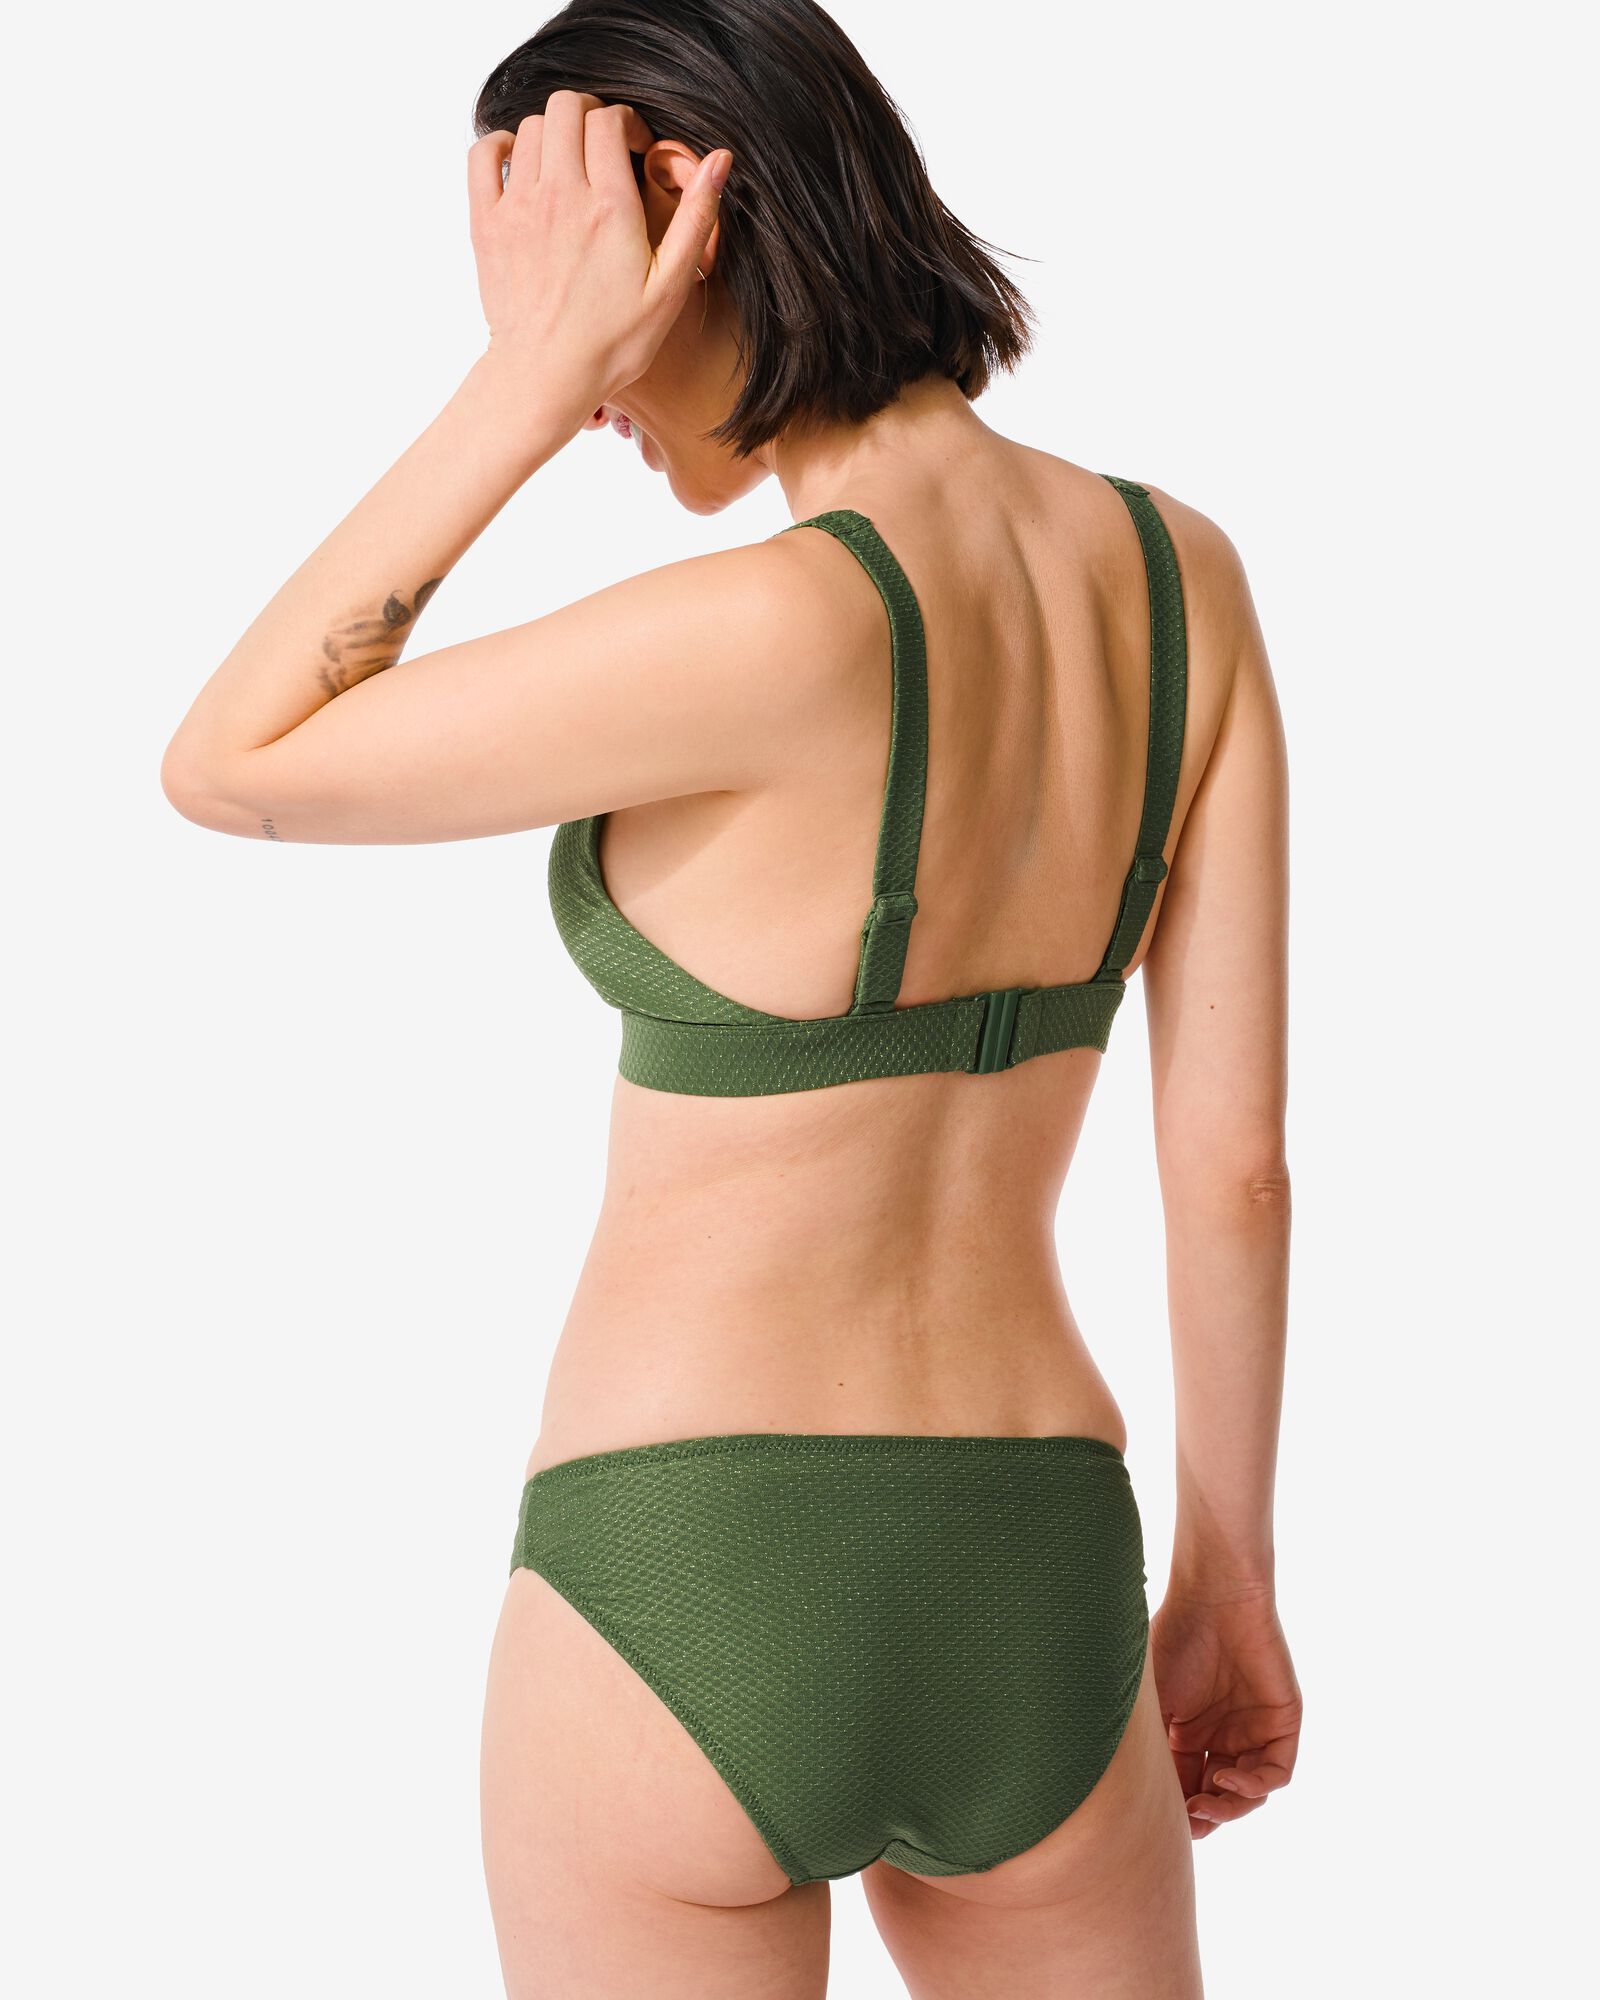 Acheter Haut de bikini femme Vert ? Bon et bon marché